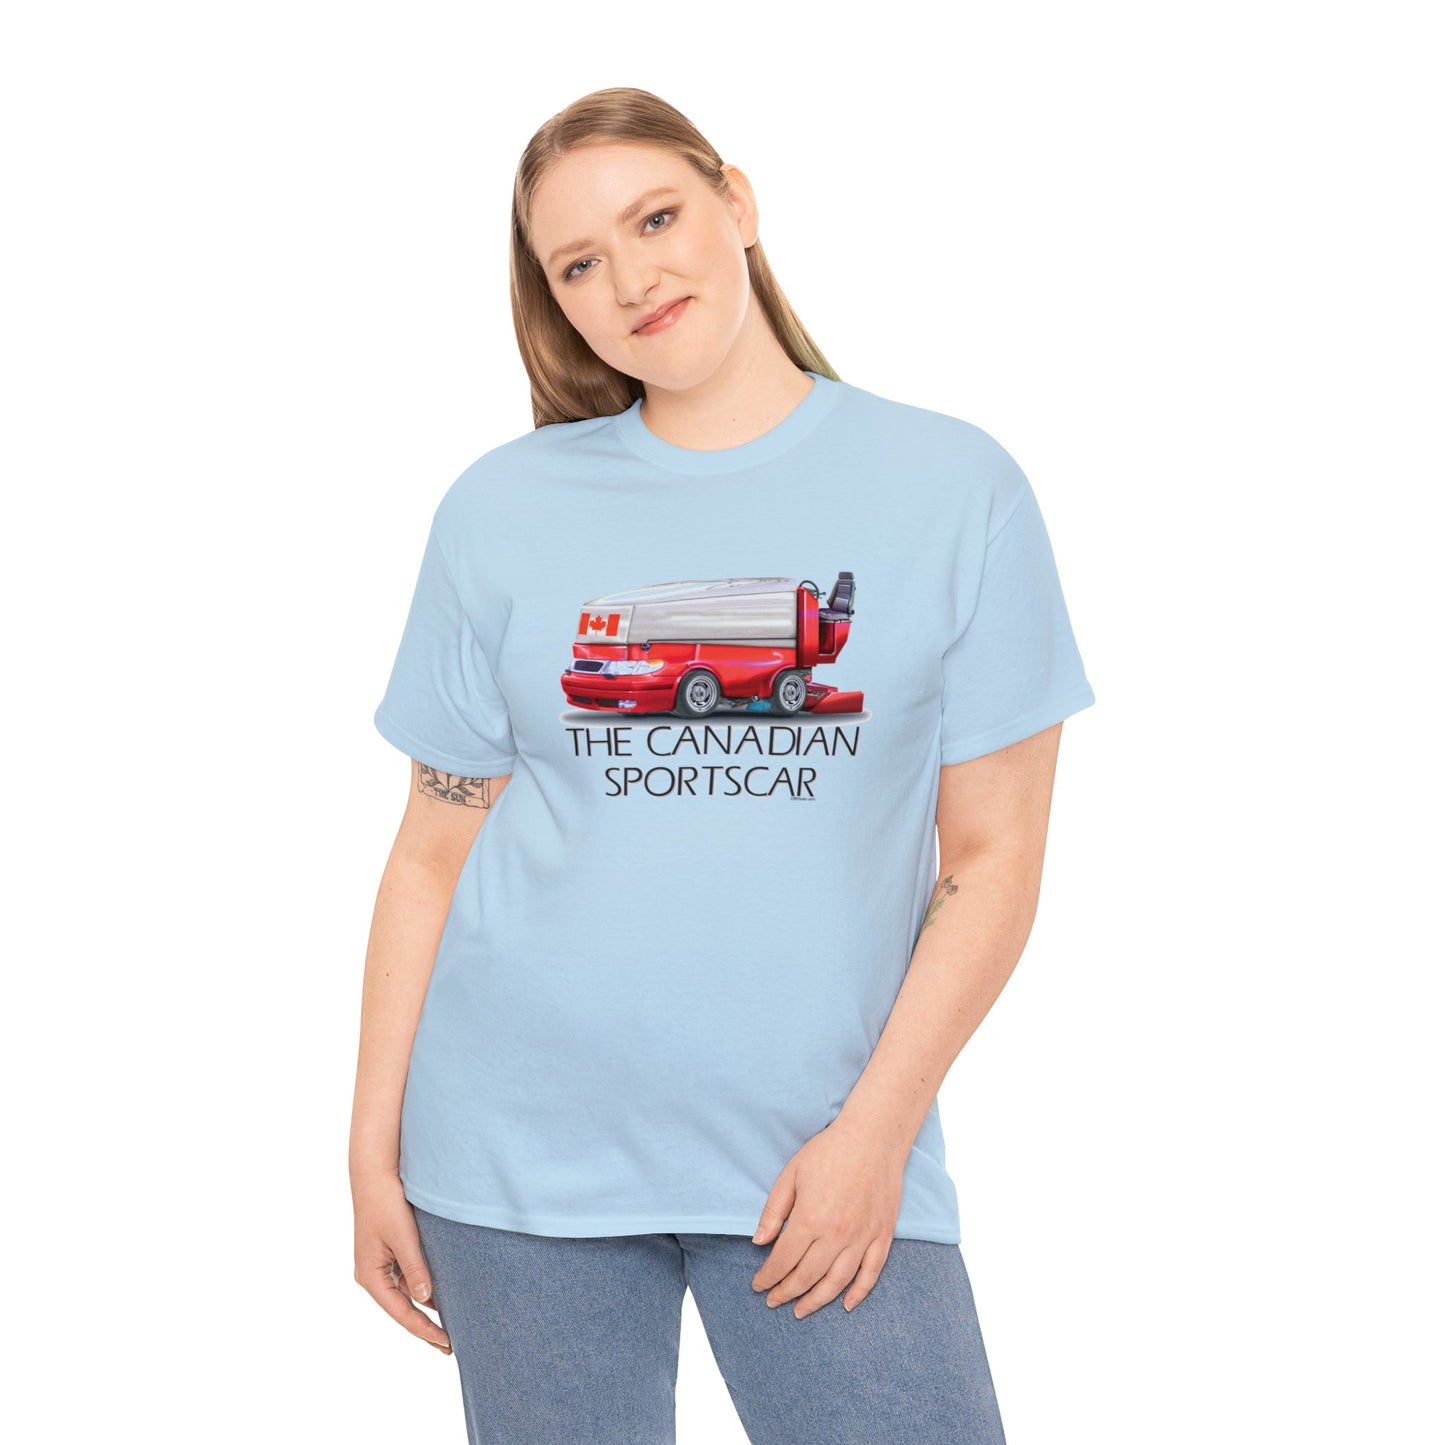 The Canadian Sportscar is an Ice Resurfacing Machine for the Hockey Rink, Fun design, Canada Hockey Parody Tee Shirt Design